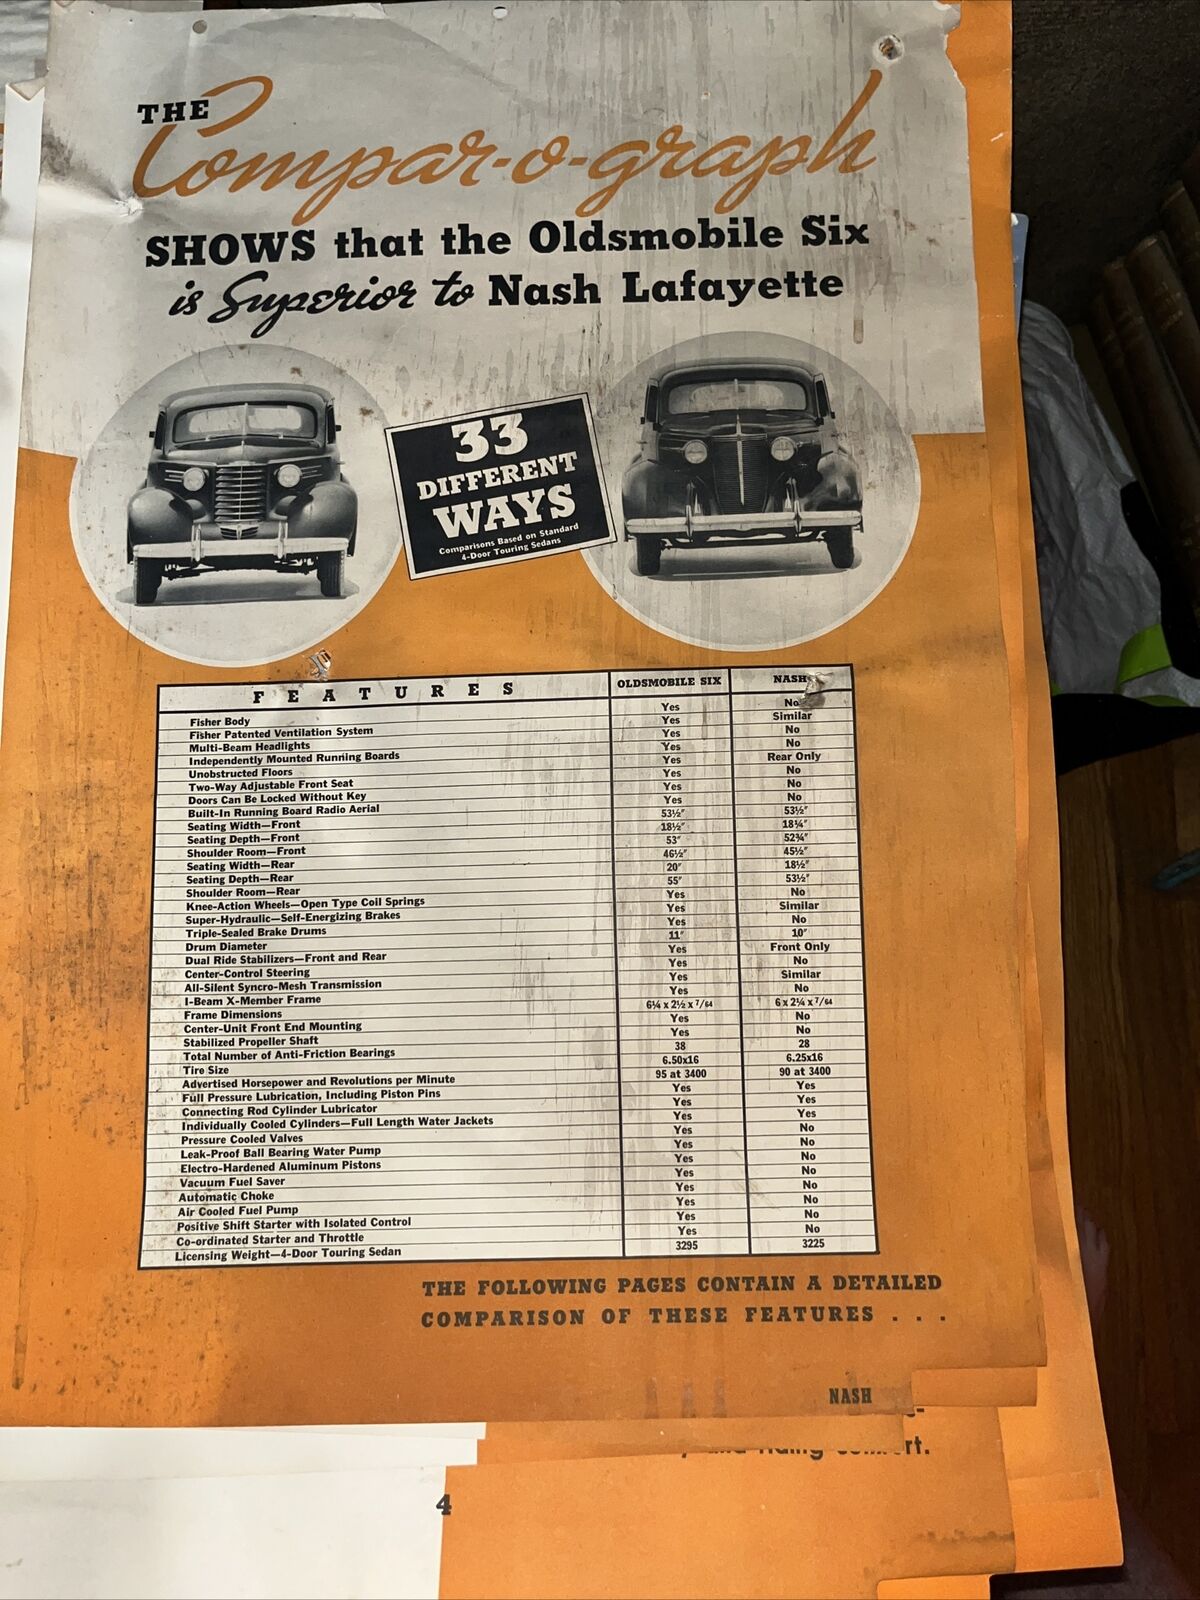 12 Vintage 23” 1930s Compargraph Ad Posters: Oldsmobile Six vs Nash Lafayette